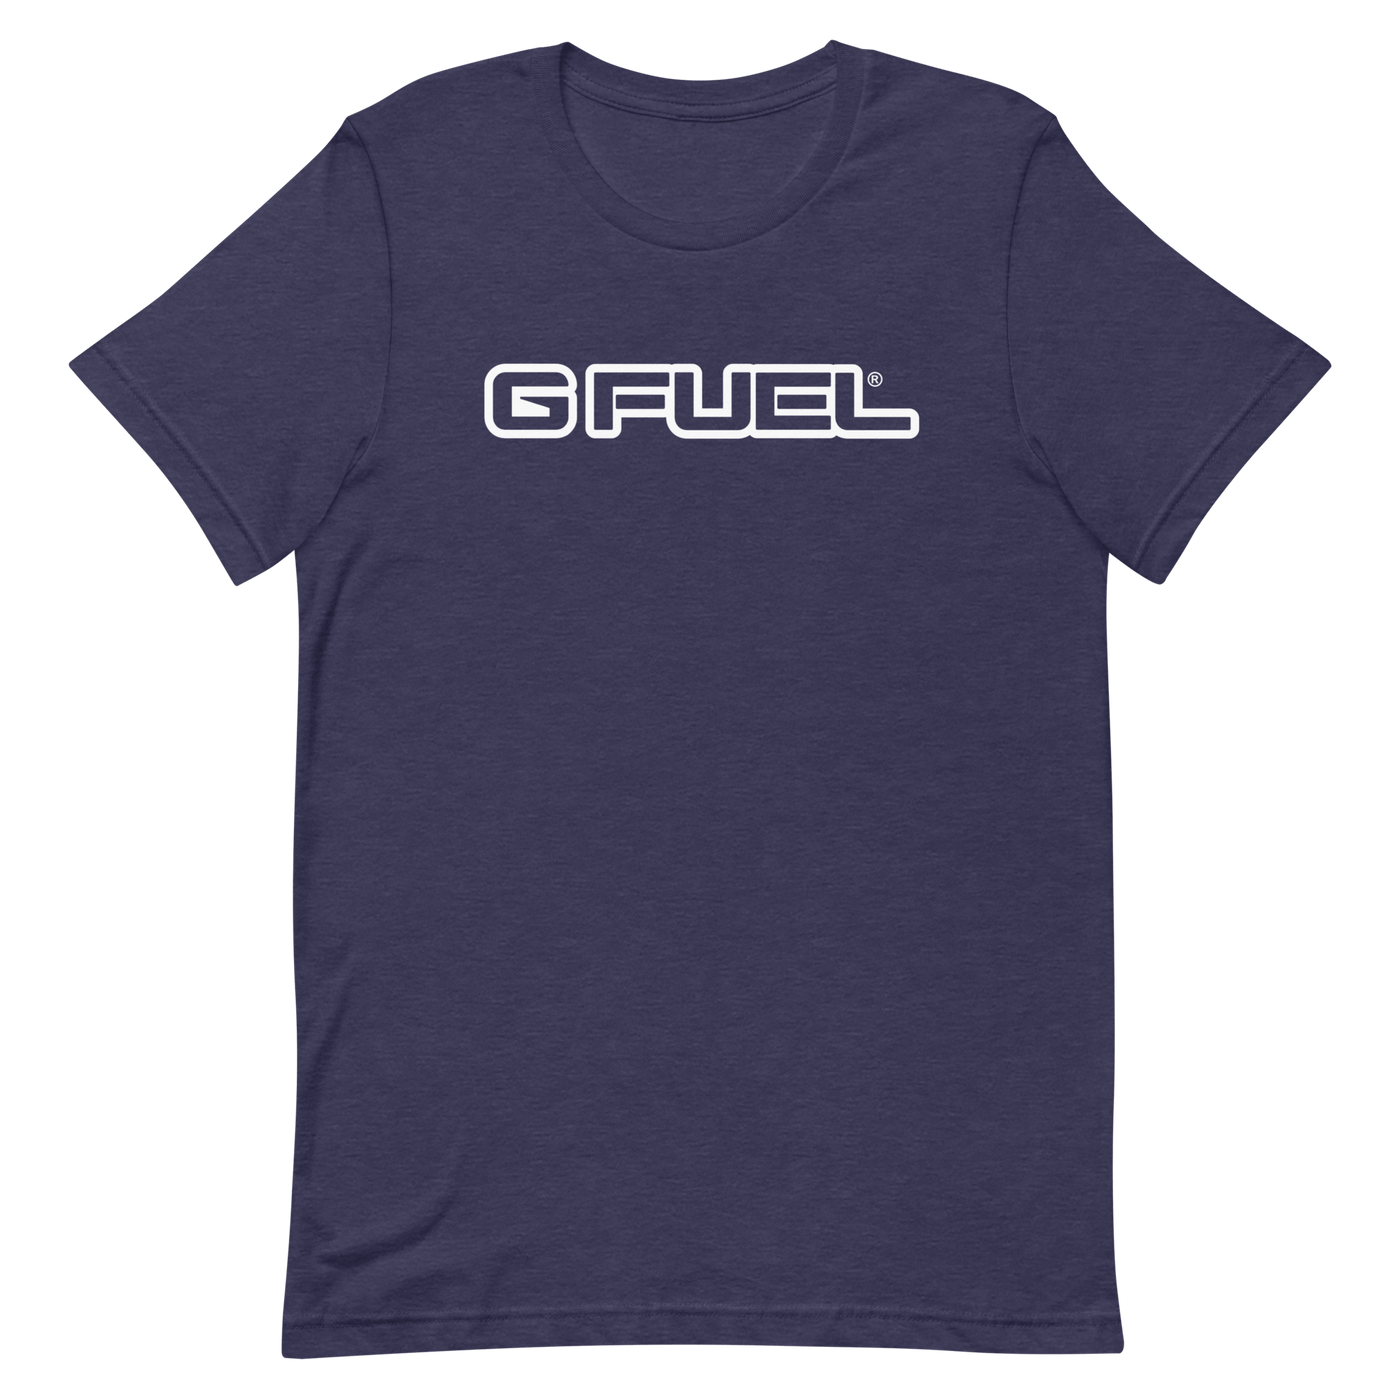 G FUEL| G FUEL T-shirt Basics Shirt Heather Midnight Navy XS 9886820_9569